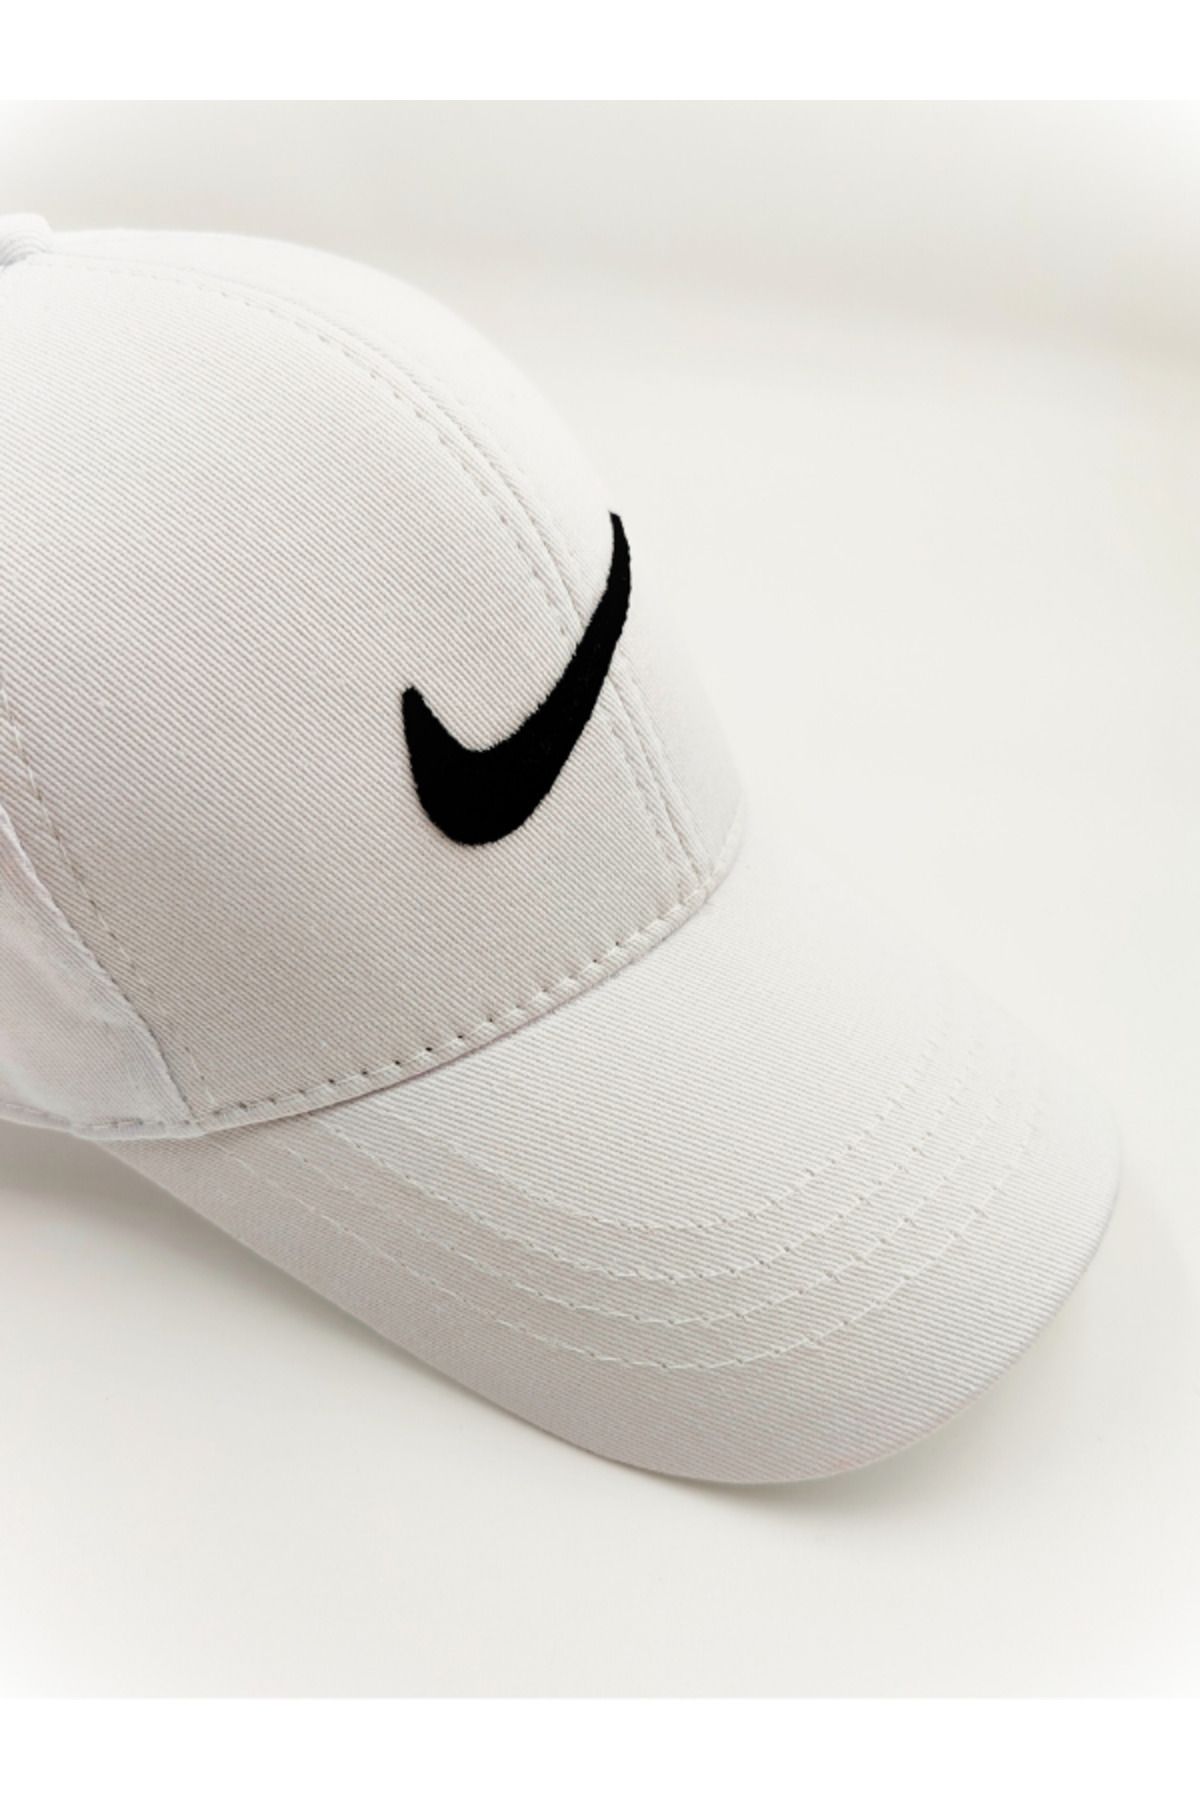 Shuttle Park Unisex Beyaz Sportswear Dri-Fit Pro Adjustable Hat Şapka